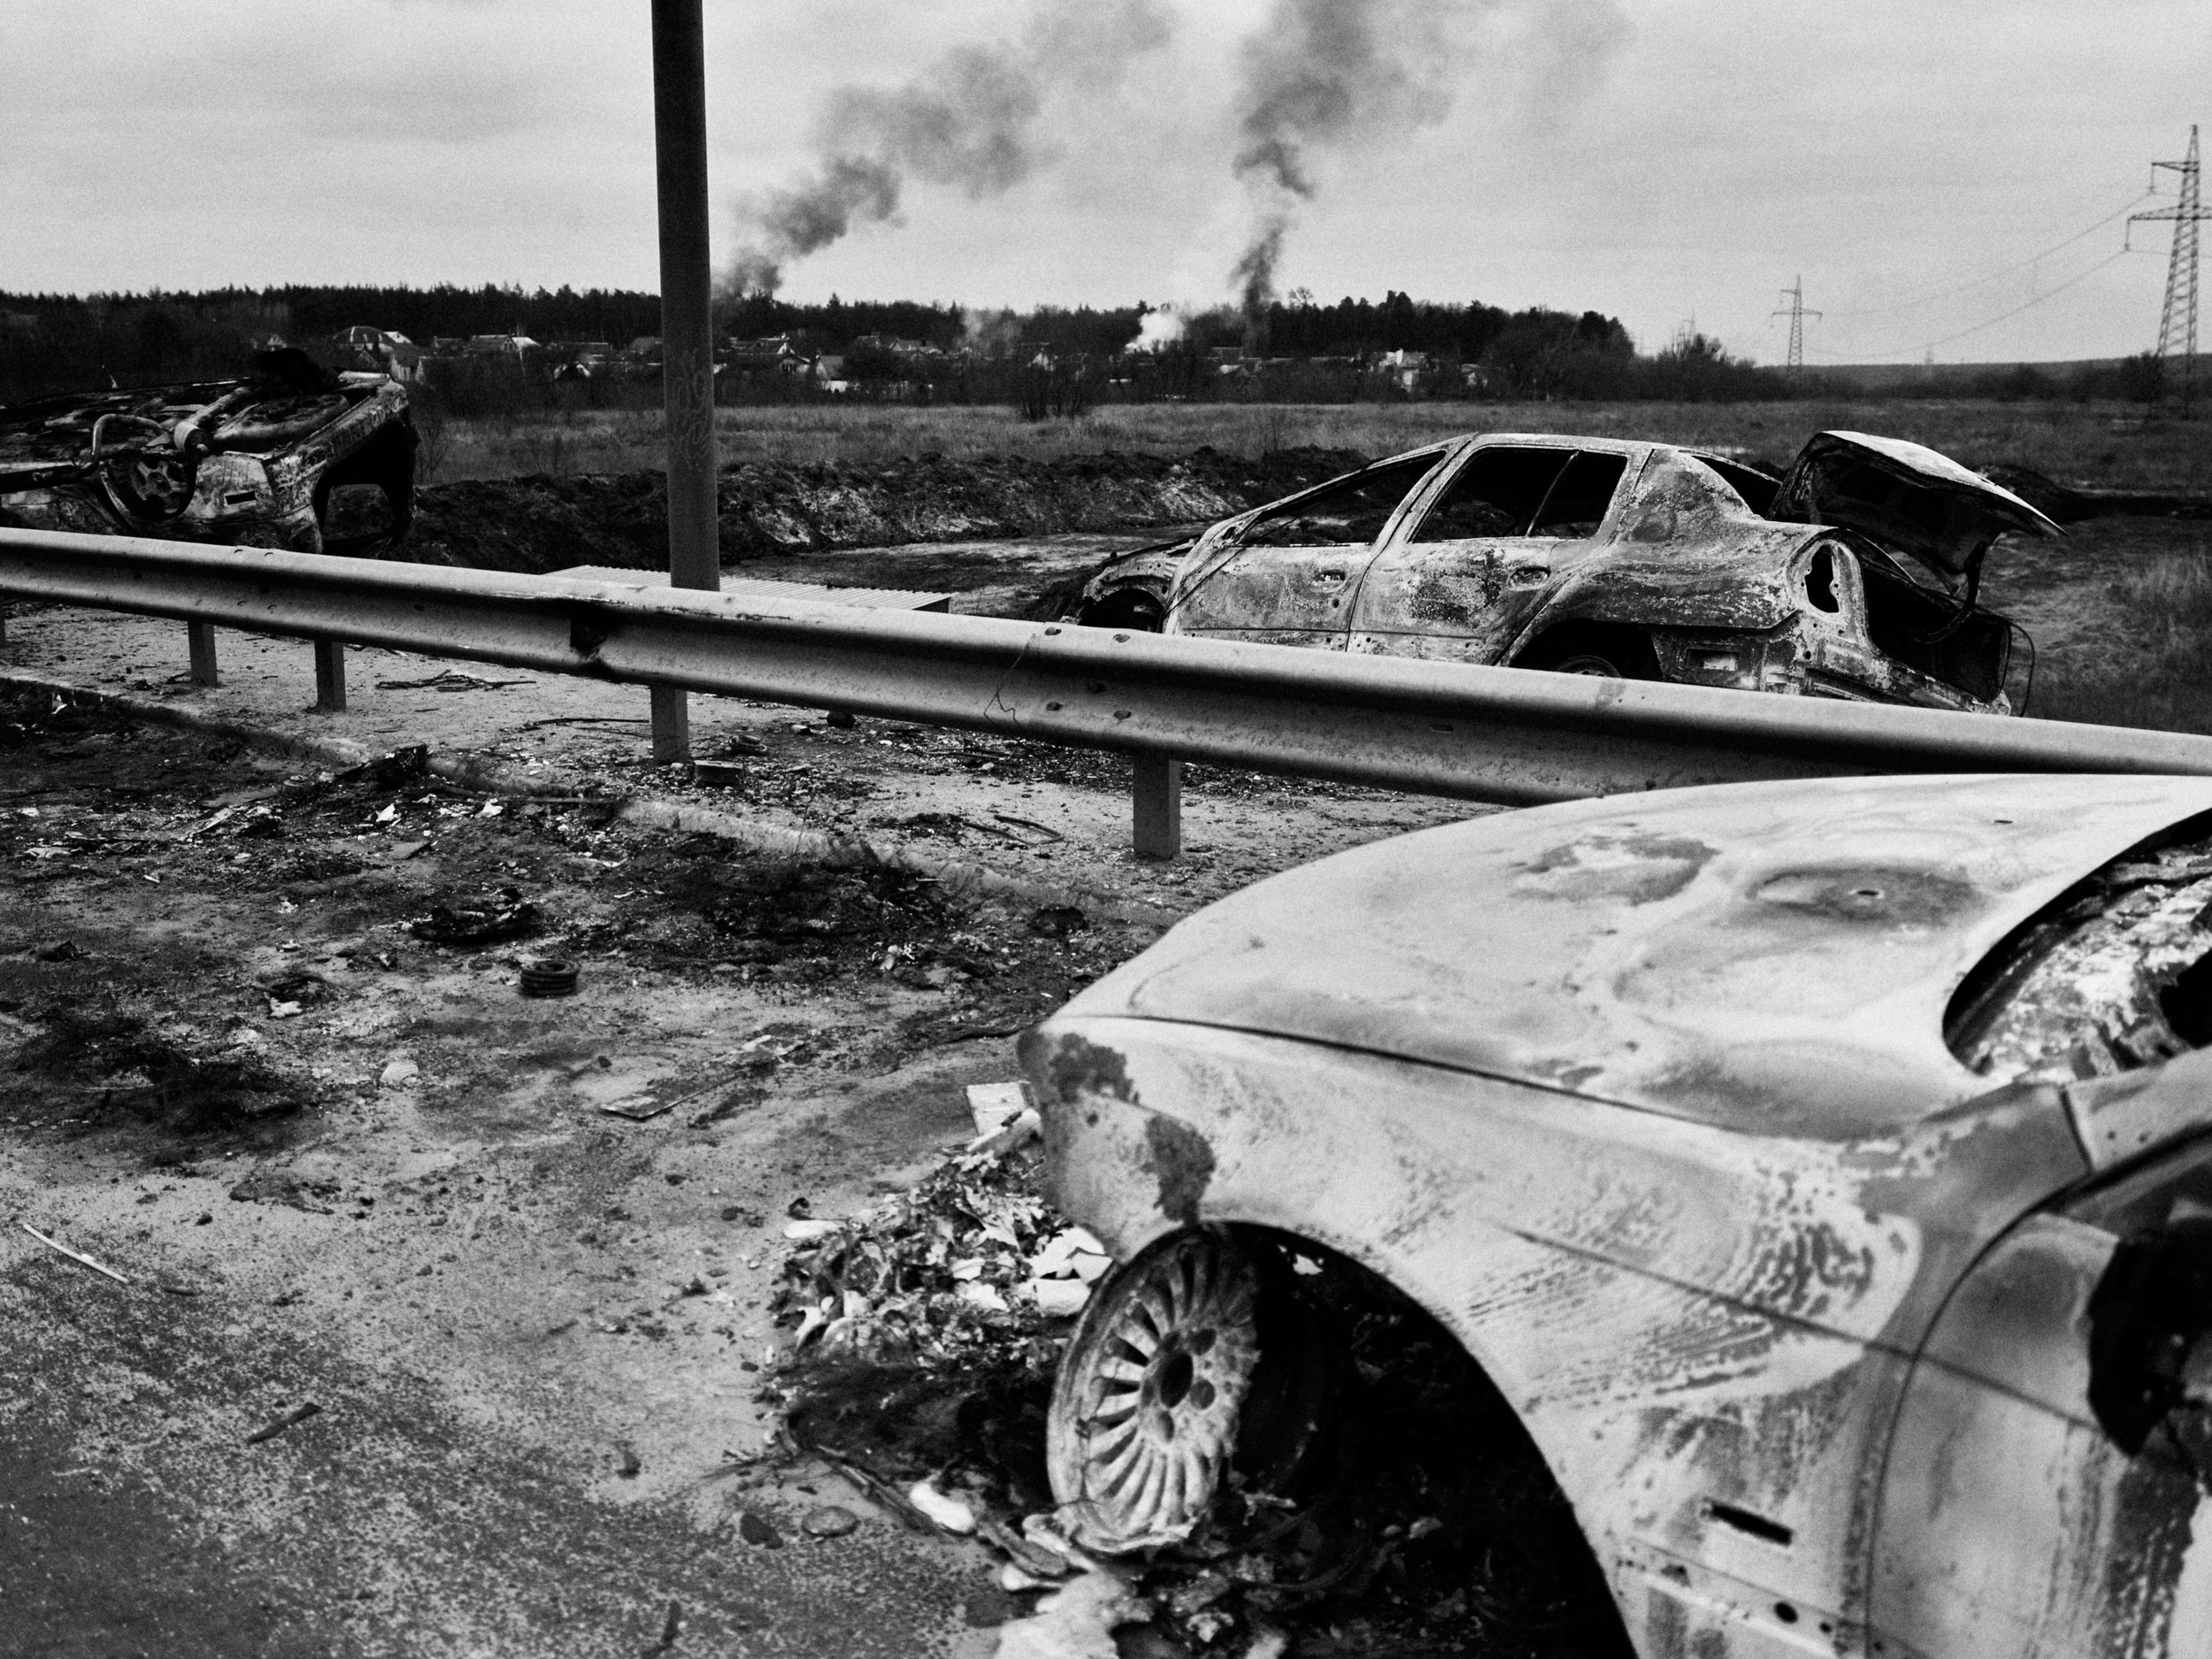 Burned cars on the Irpin Bridge, Kyiv Oblast